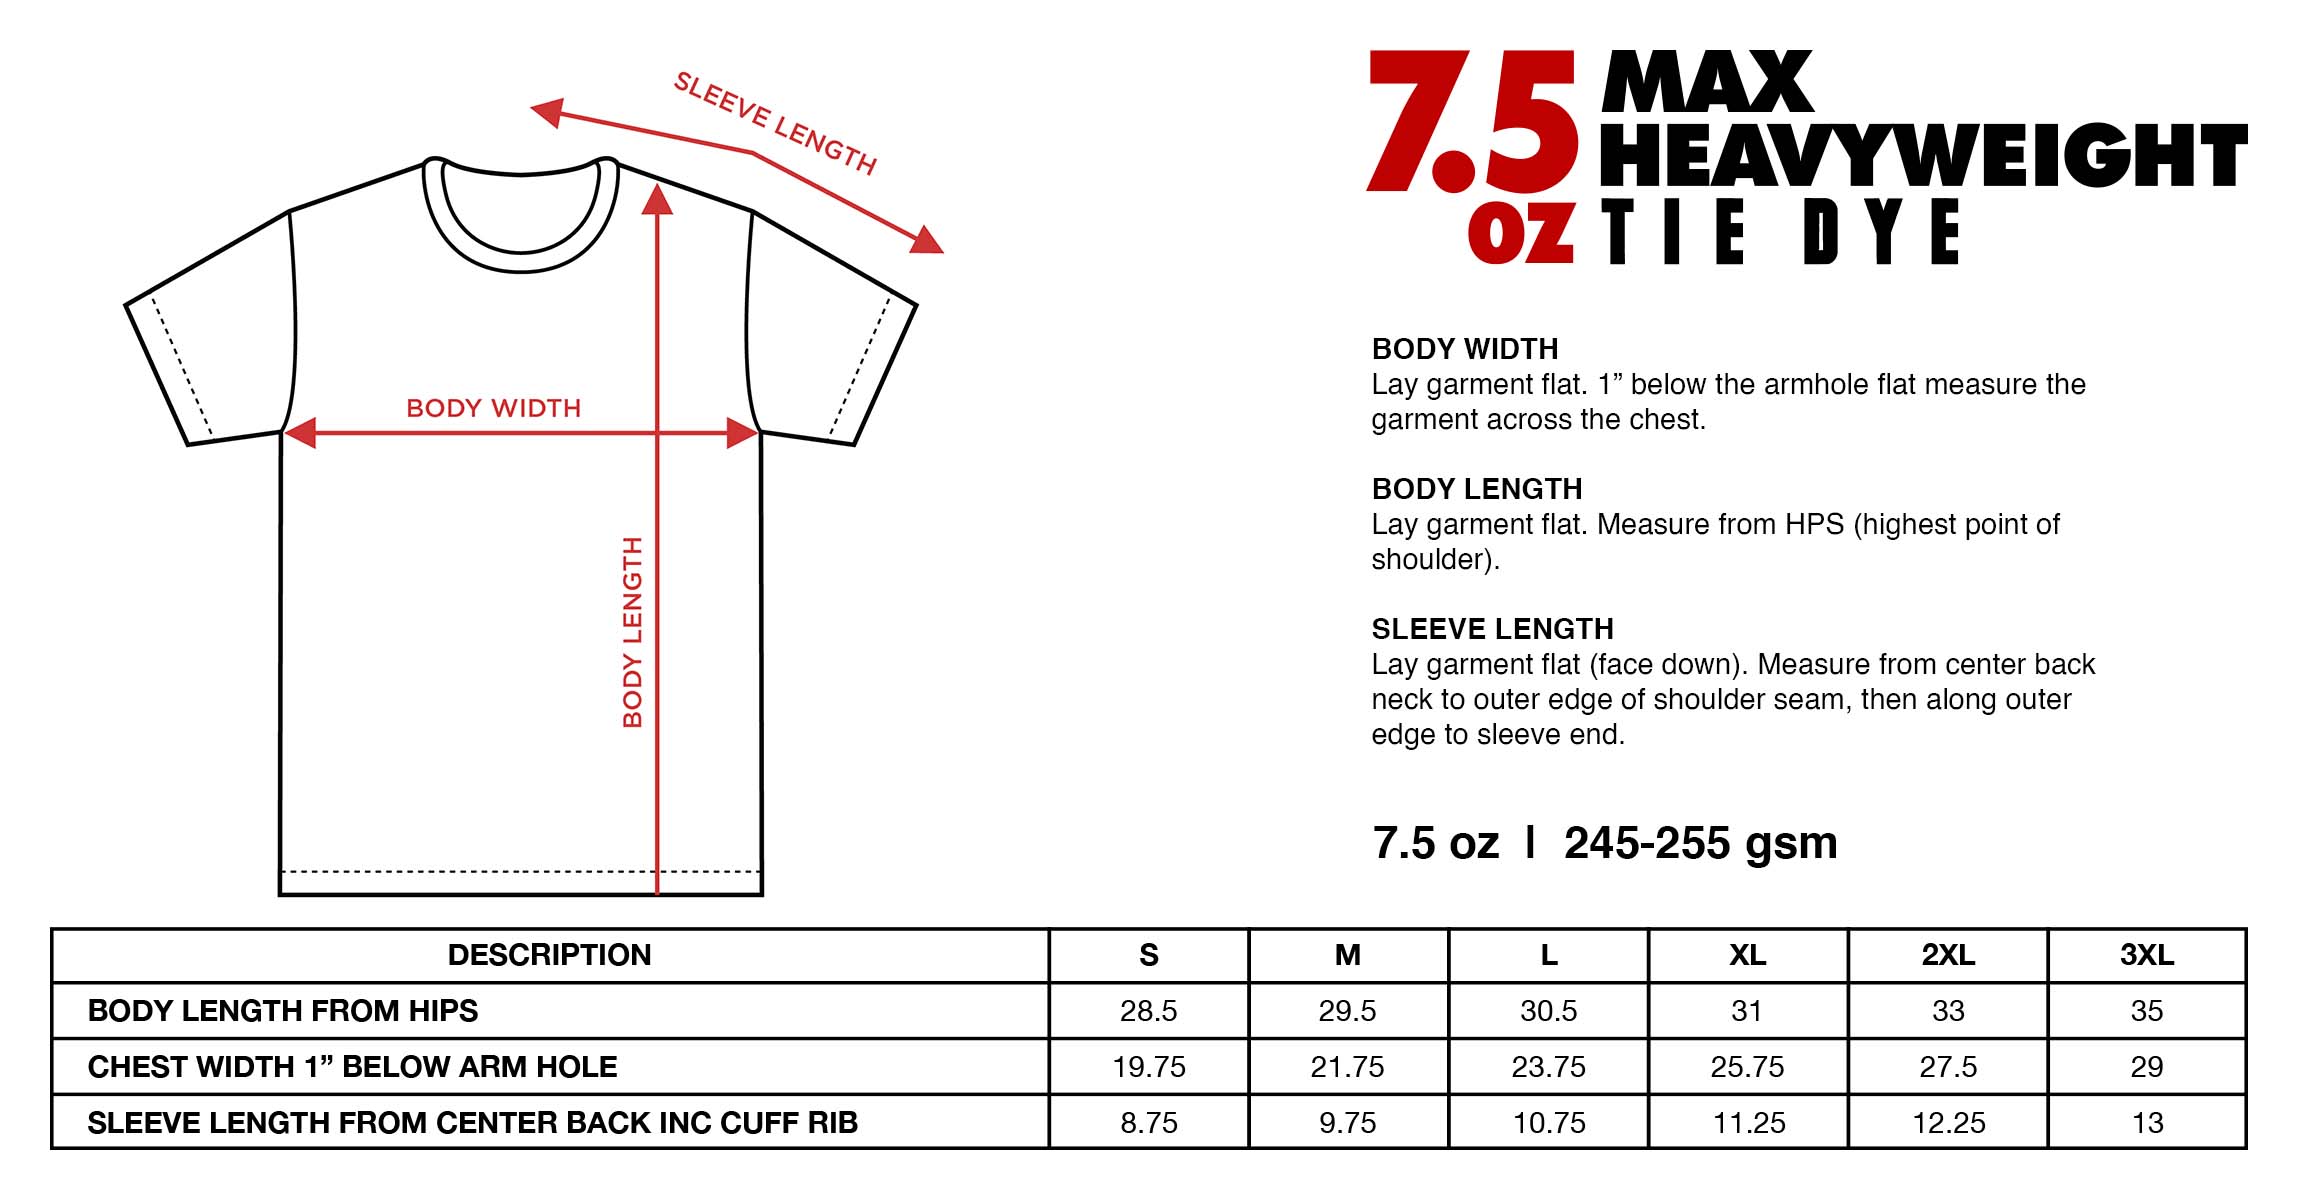 Shaka Wear SHGDD Adult Garment-Dyed Drop-Shoulder T-Shirt - From $8.35